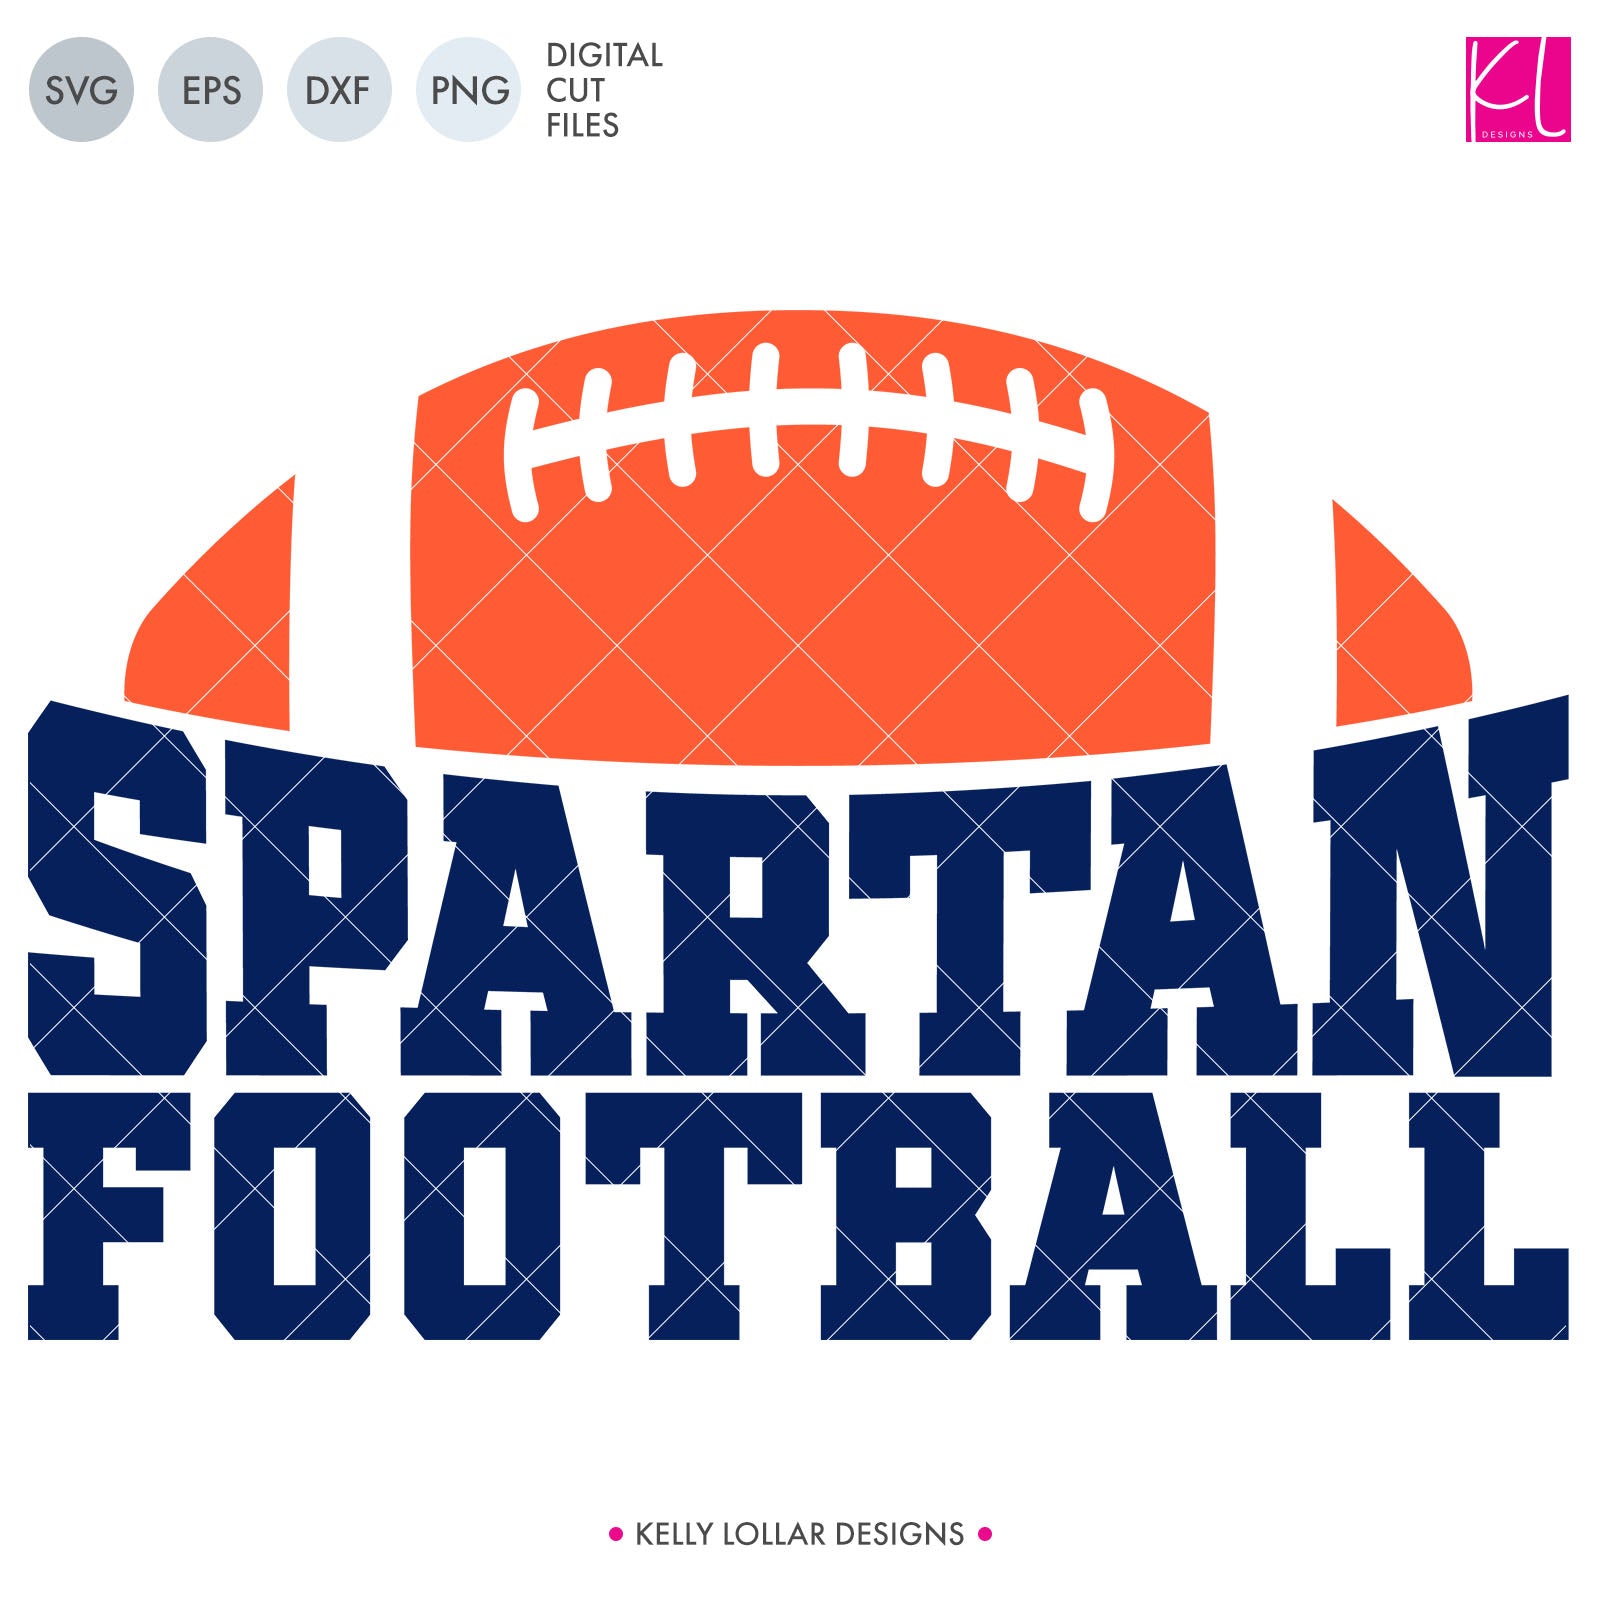 Kelly EPS SVG PNG Spartans | Files Bundle Football Lollar - Designs Cut DXF